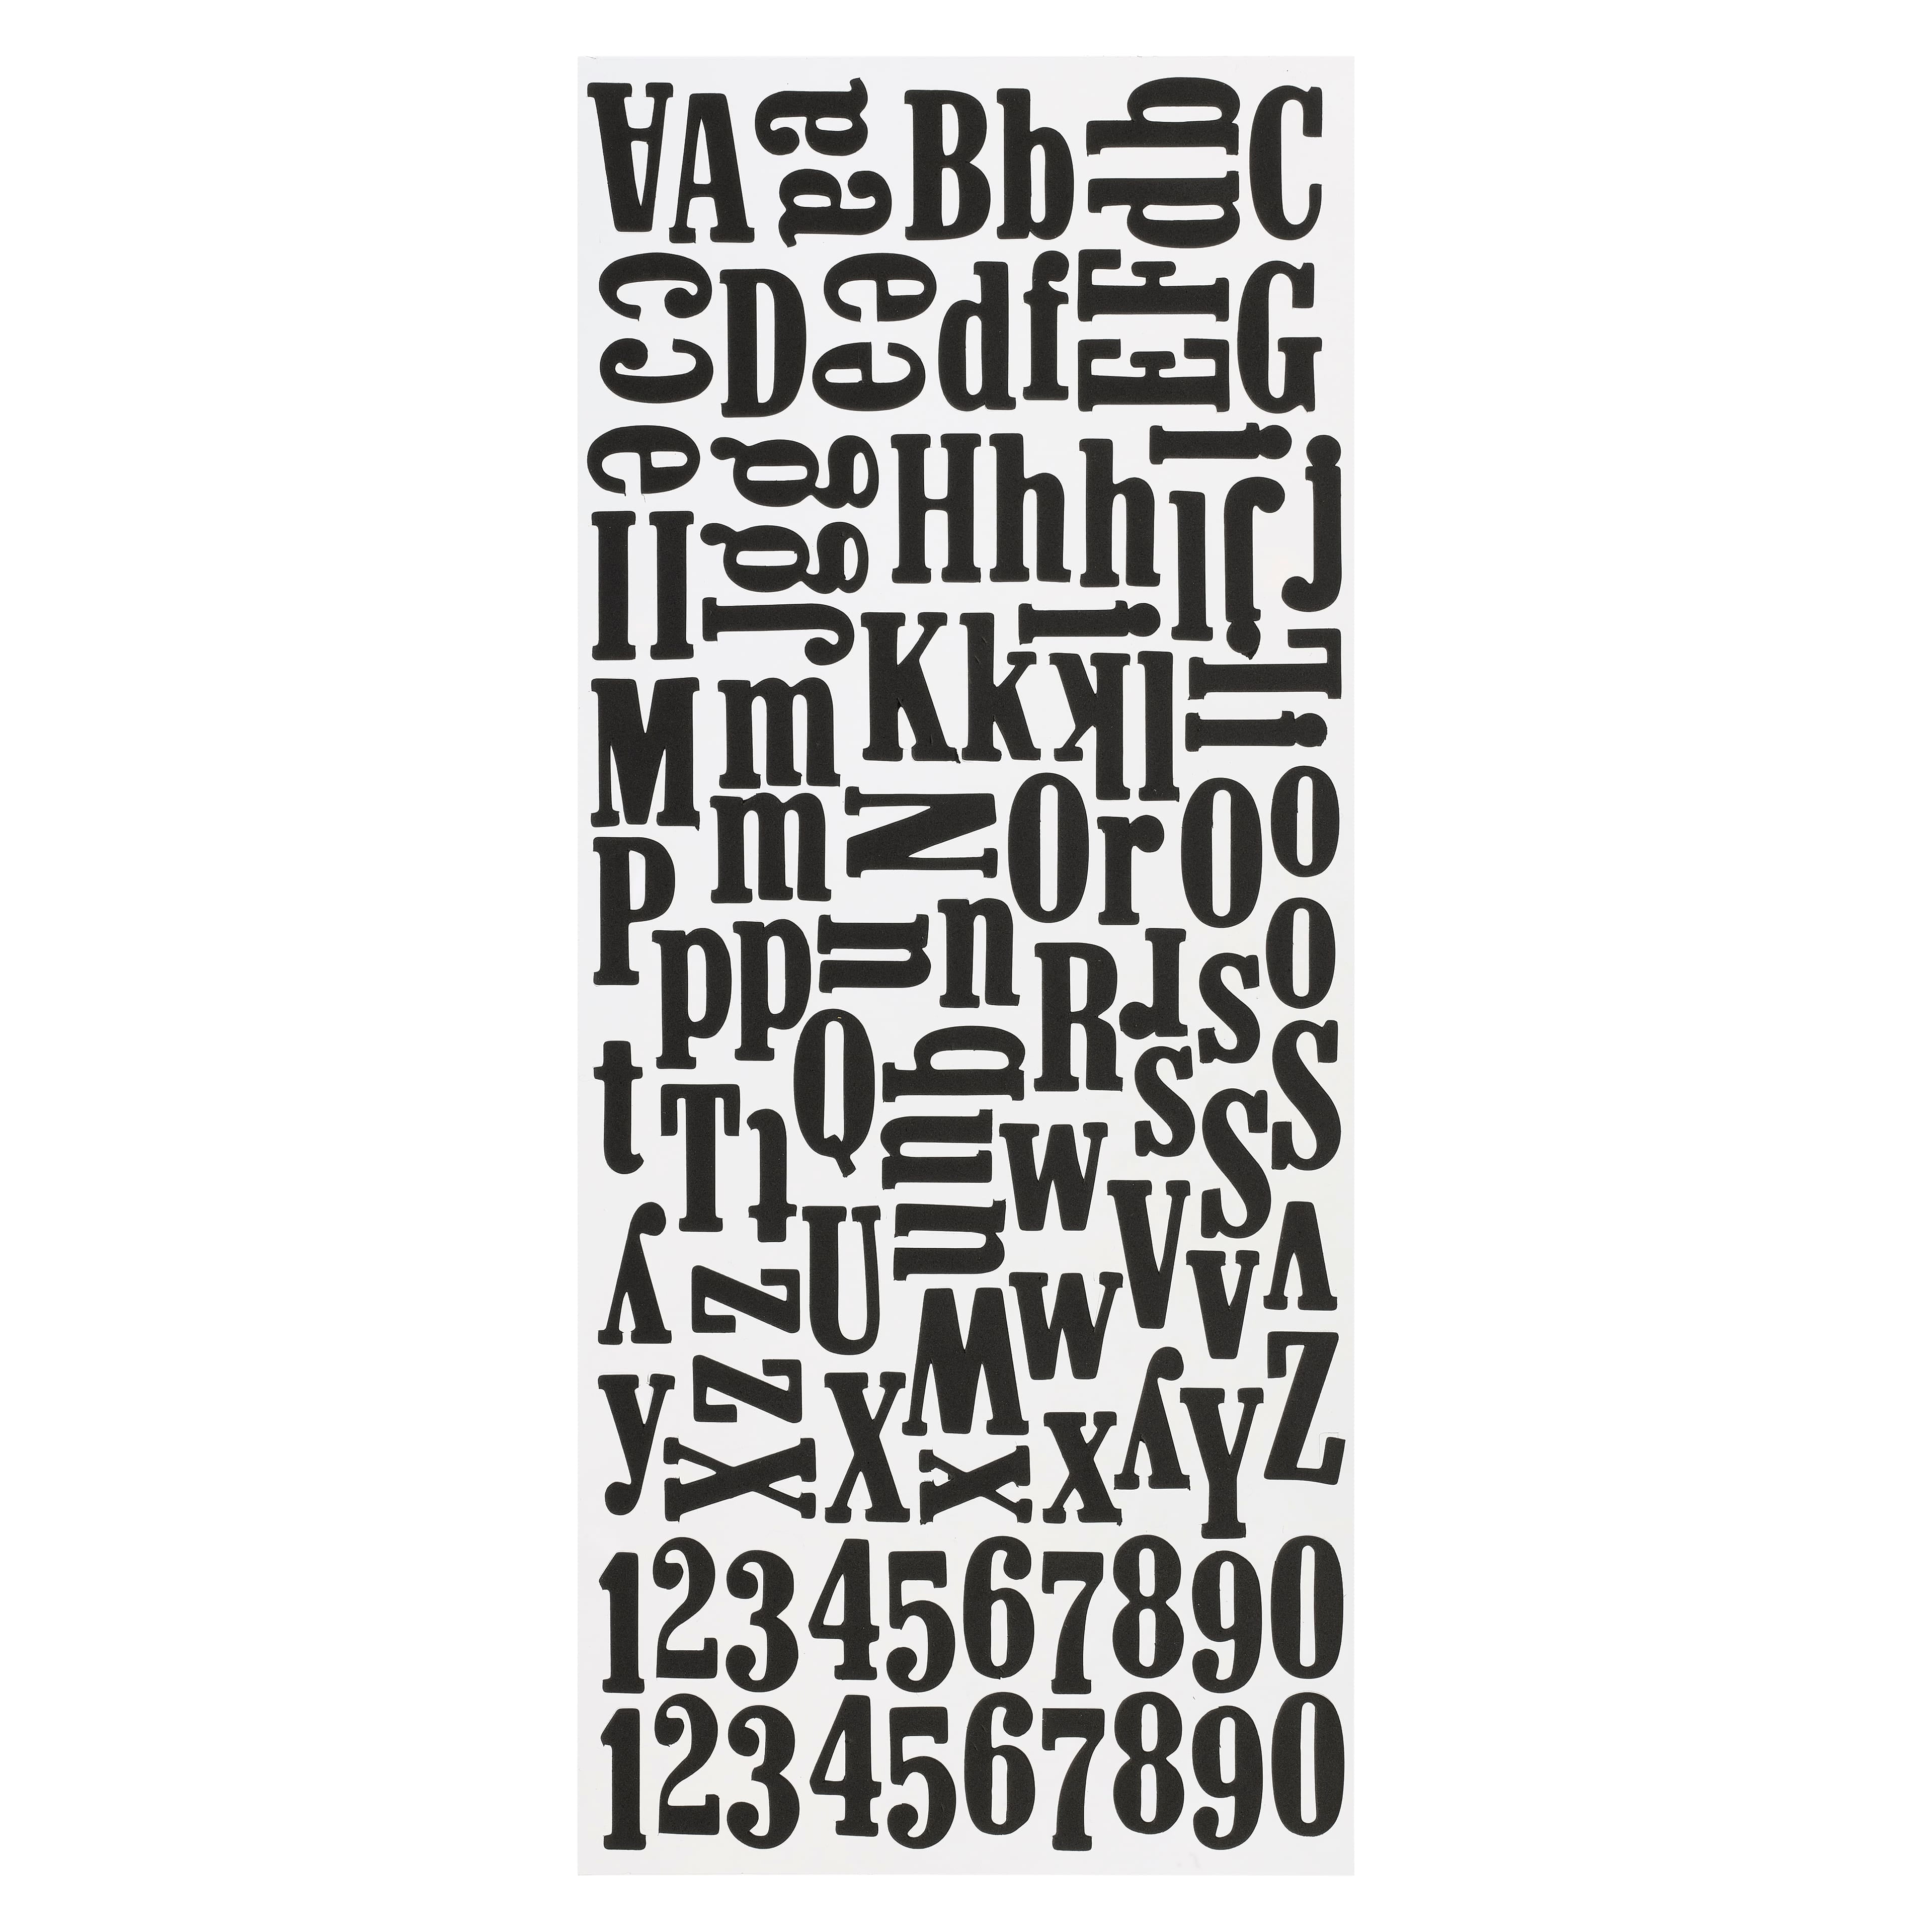 Alphabet Letter Sticker Sheets, 591-Count